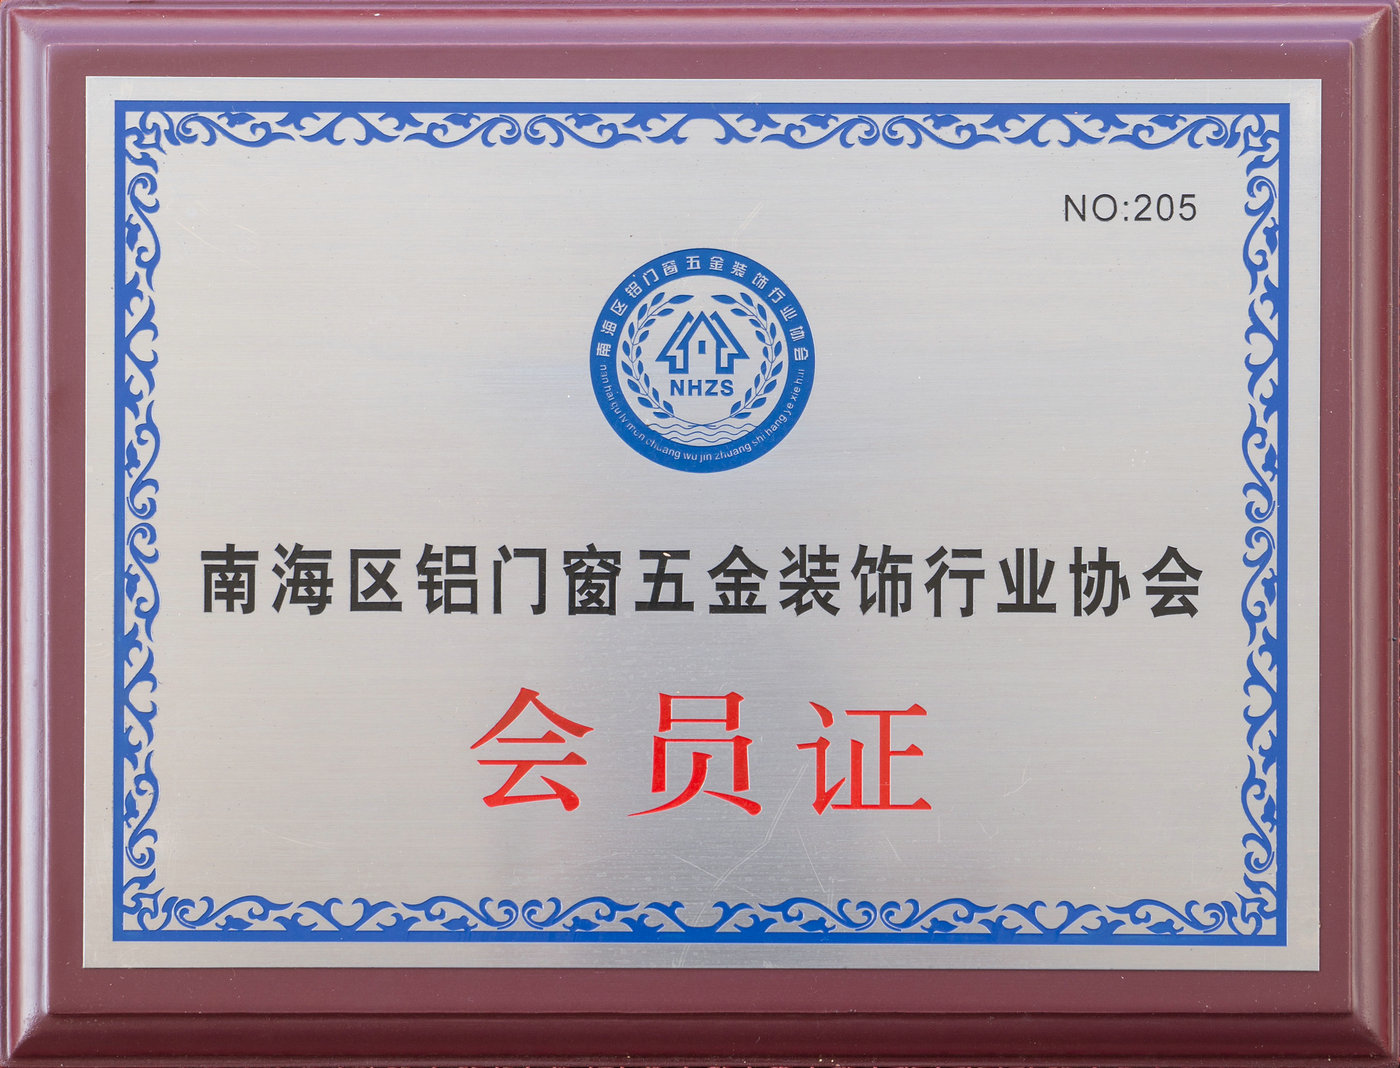 Membership Card of Nanhai District Aluminum Door and Window Hardware Decoration Industry Association